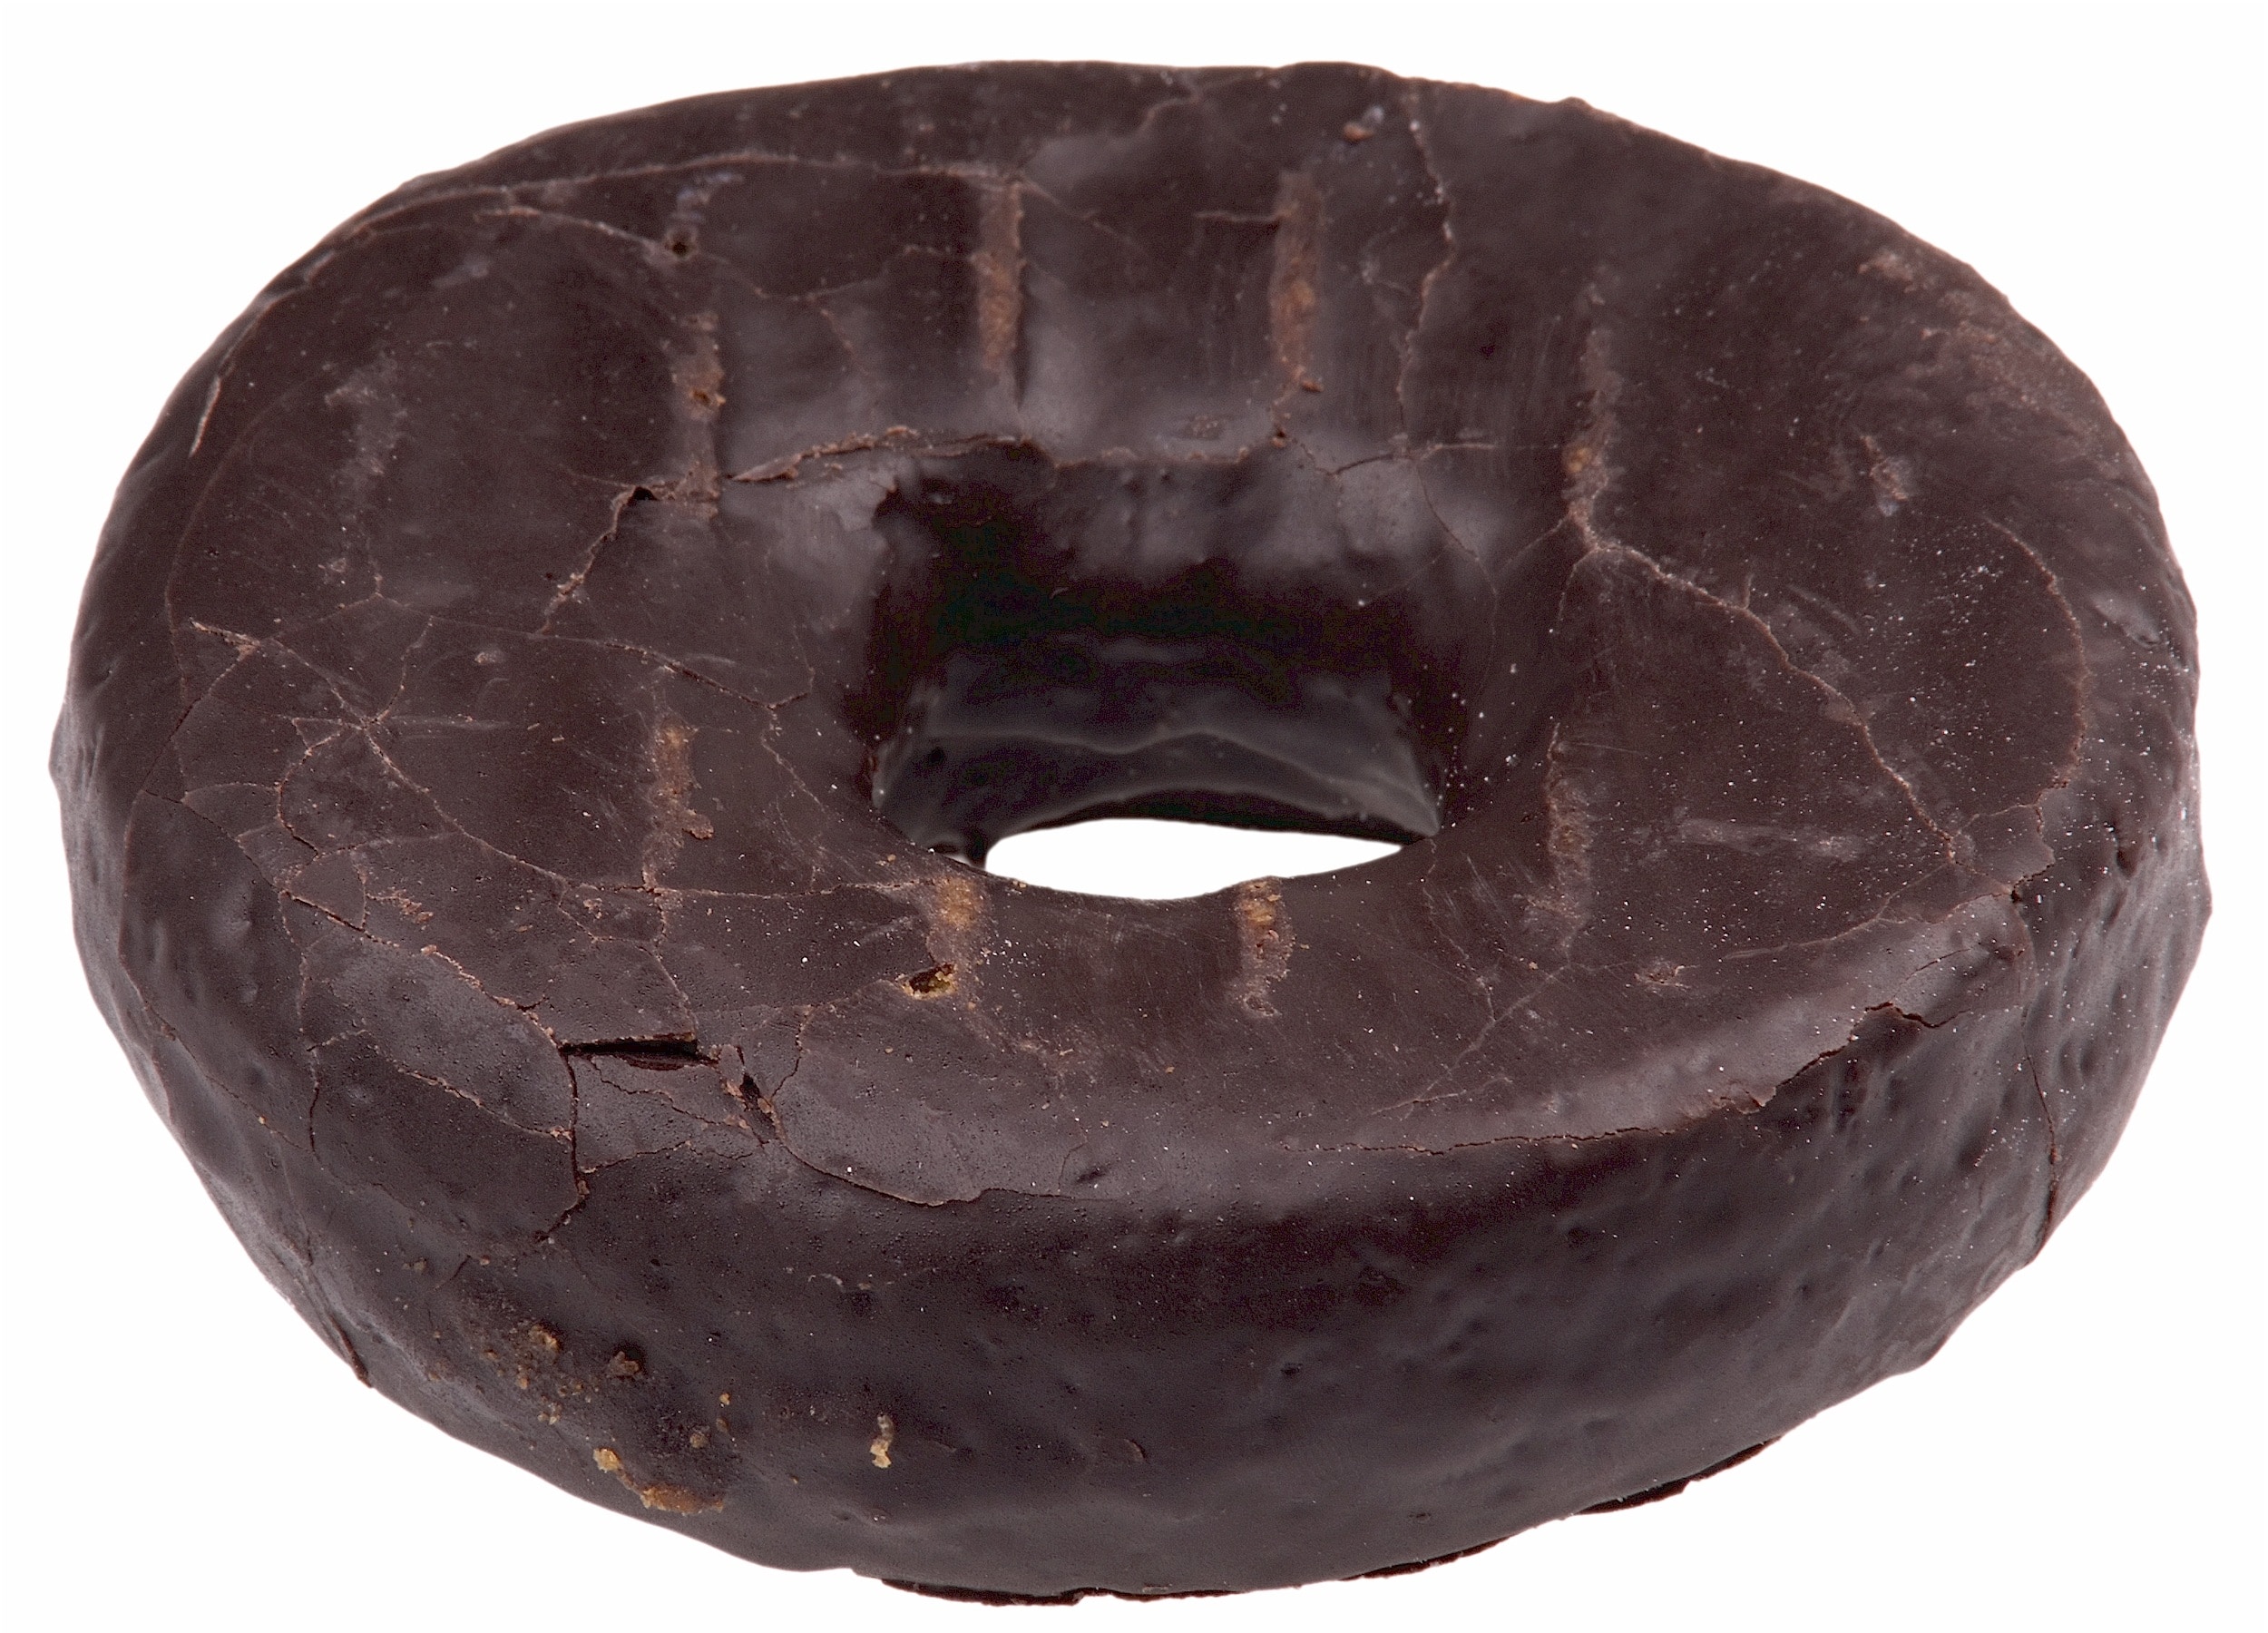 chocolate doughnut